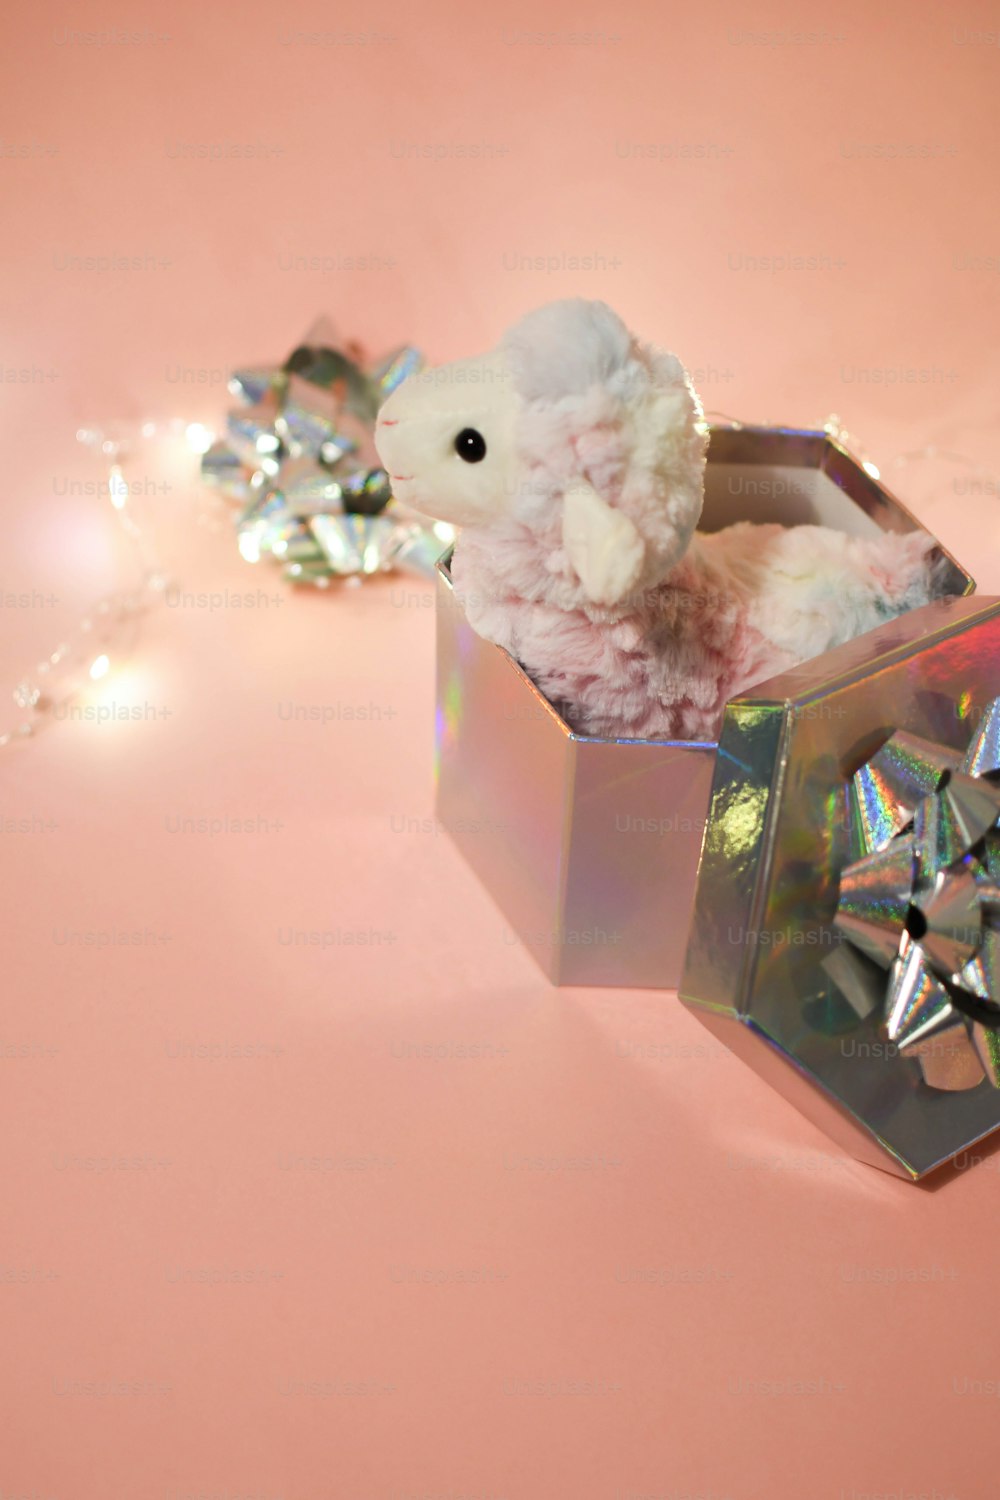 a small white teddy bear sitting inside of a box